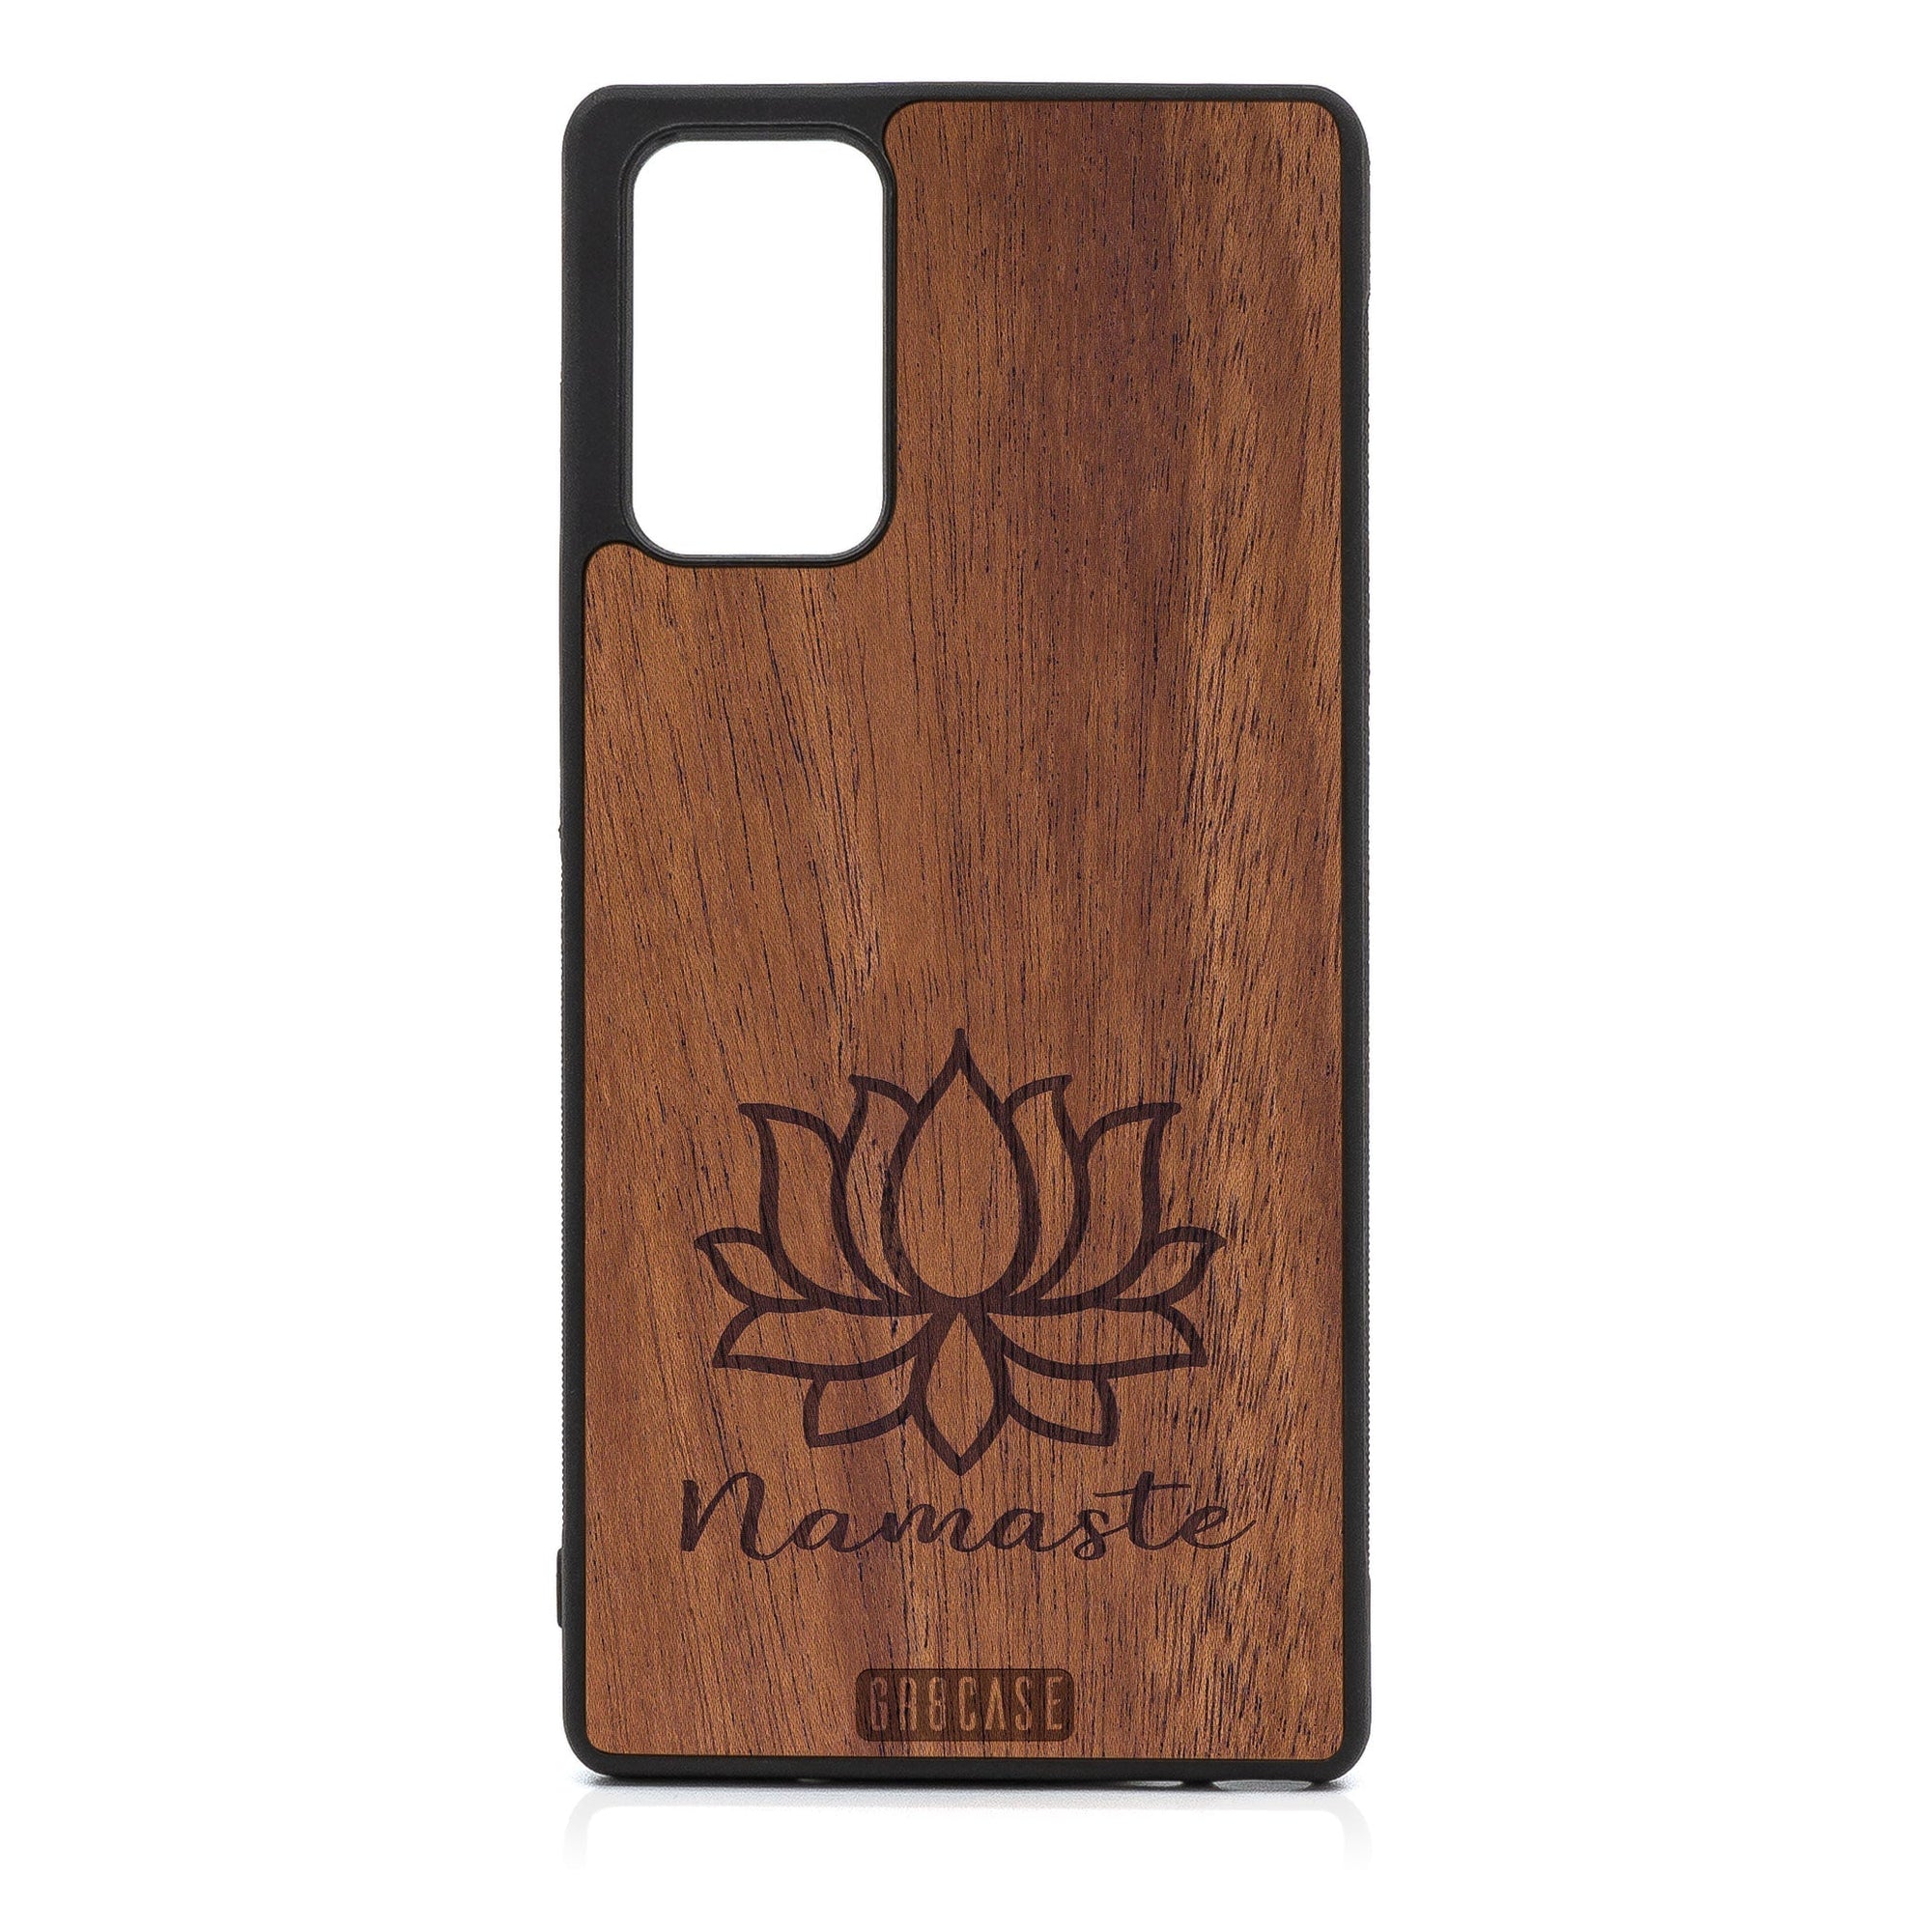 Namaste (Lotus Flower) Design Wood Case For Samsung Galaxy A72 5G